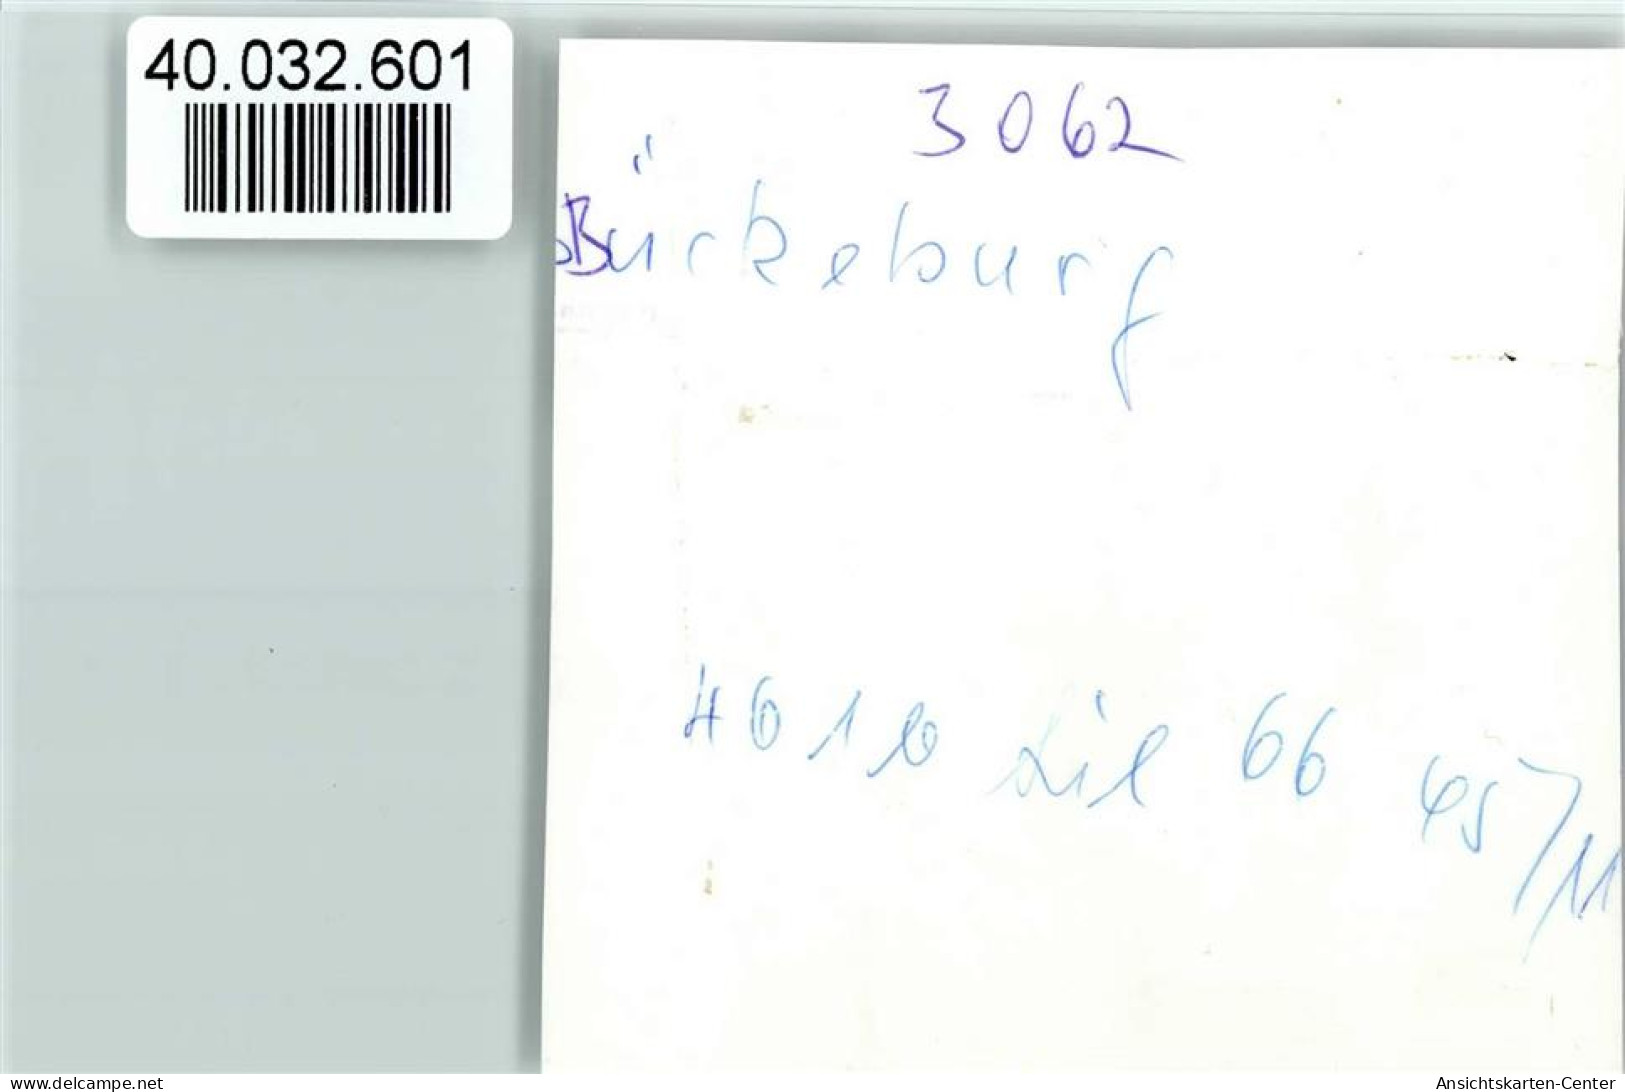 40032601 - Bueckeburg - Bueckeburg